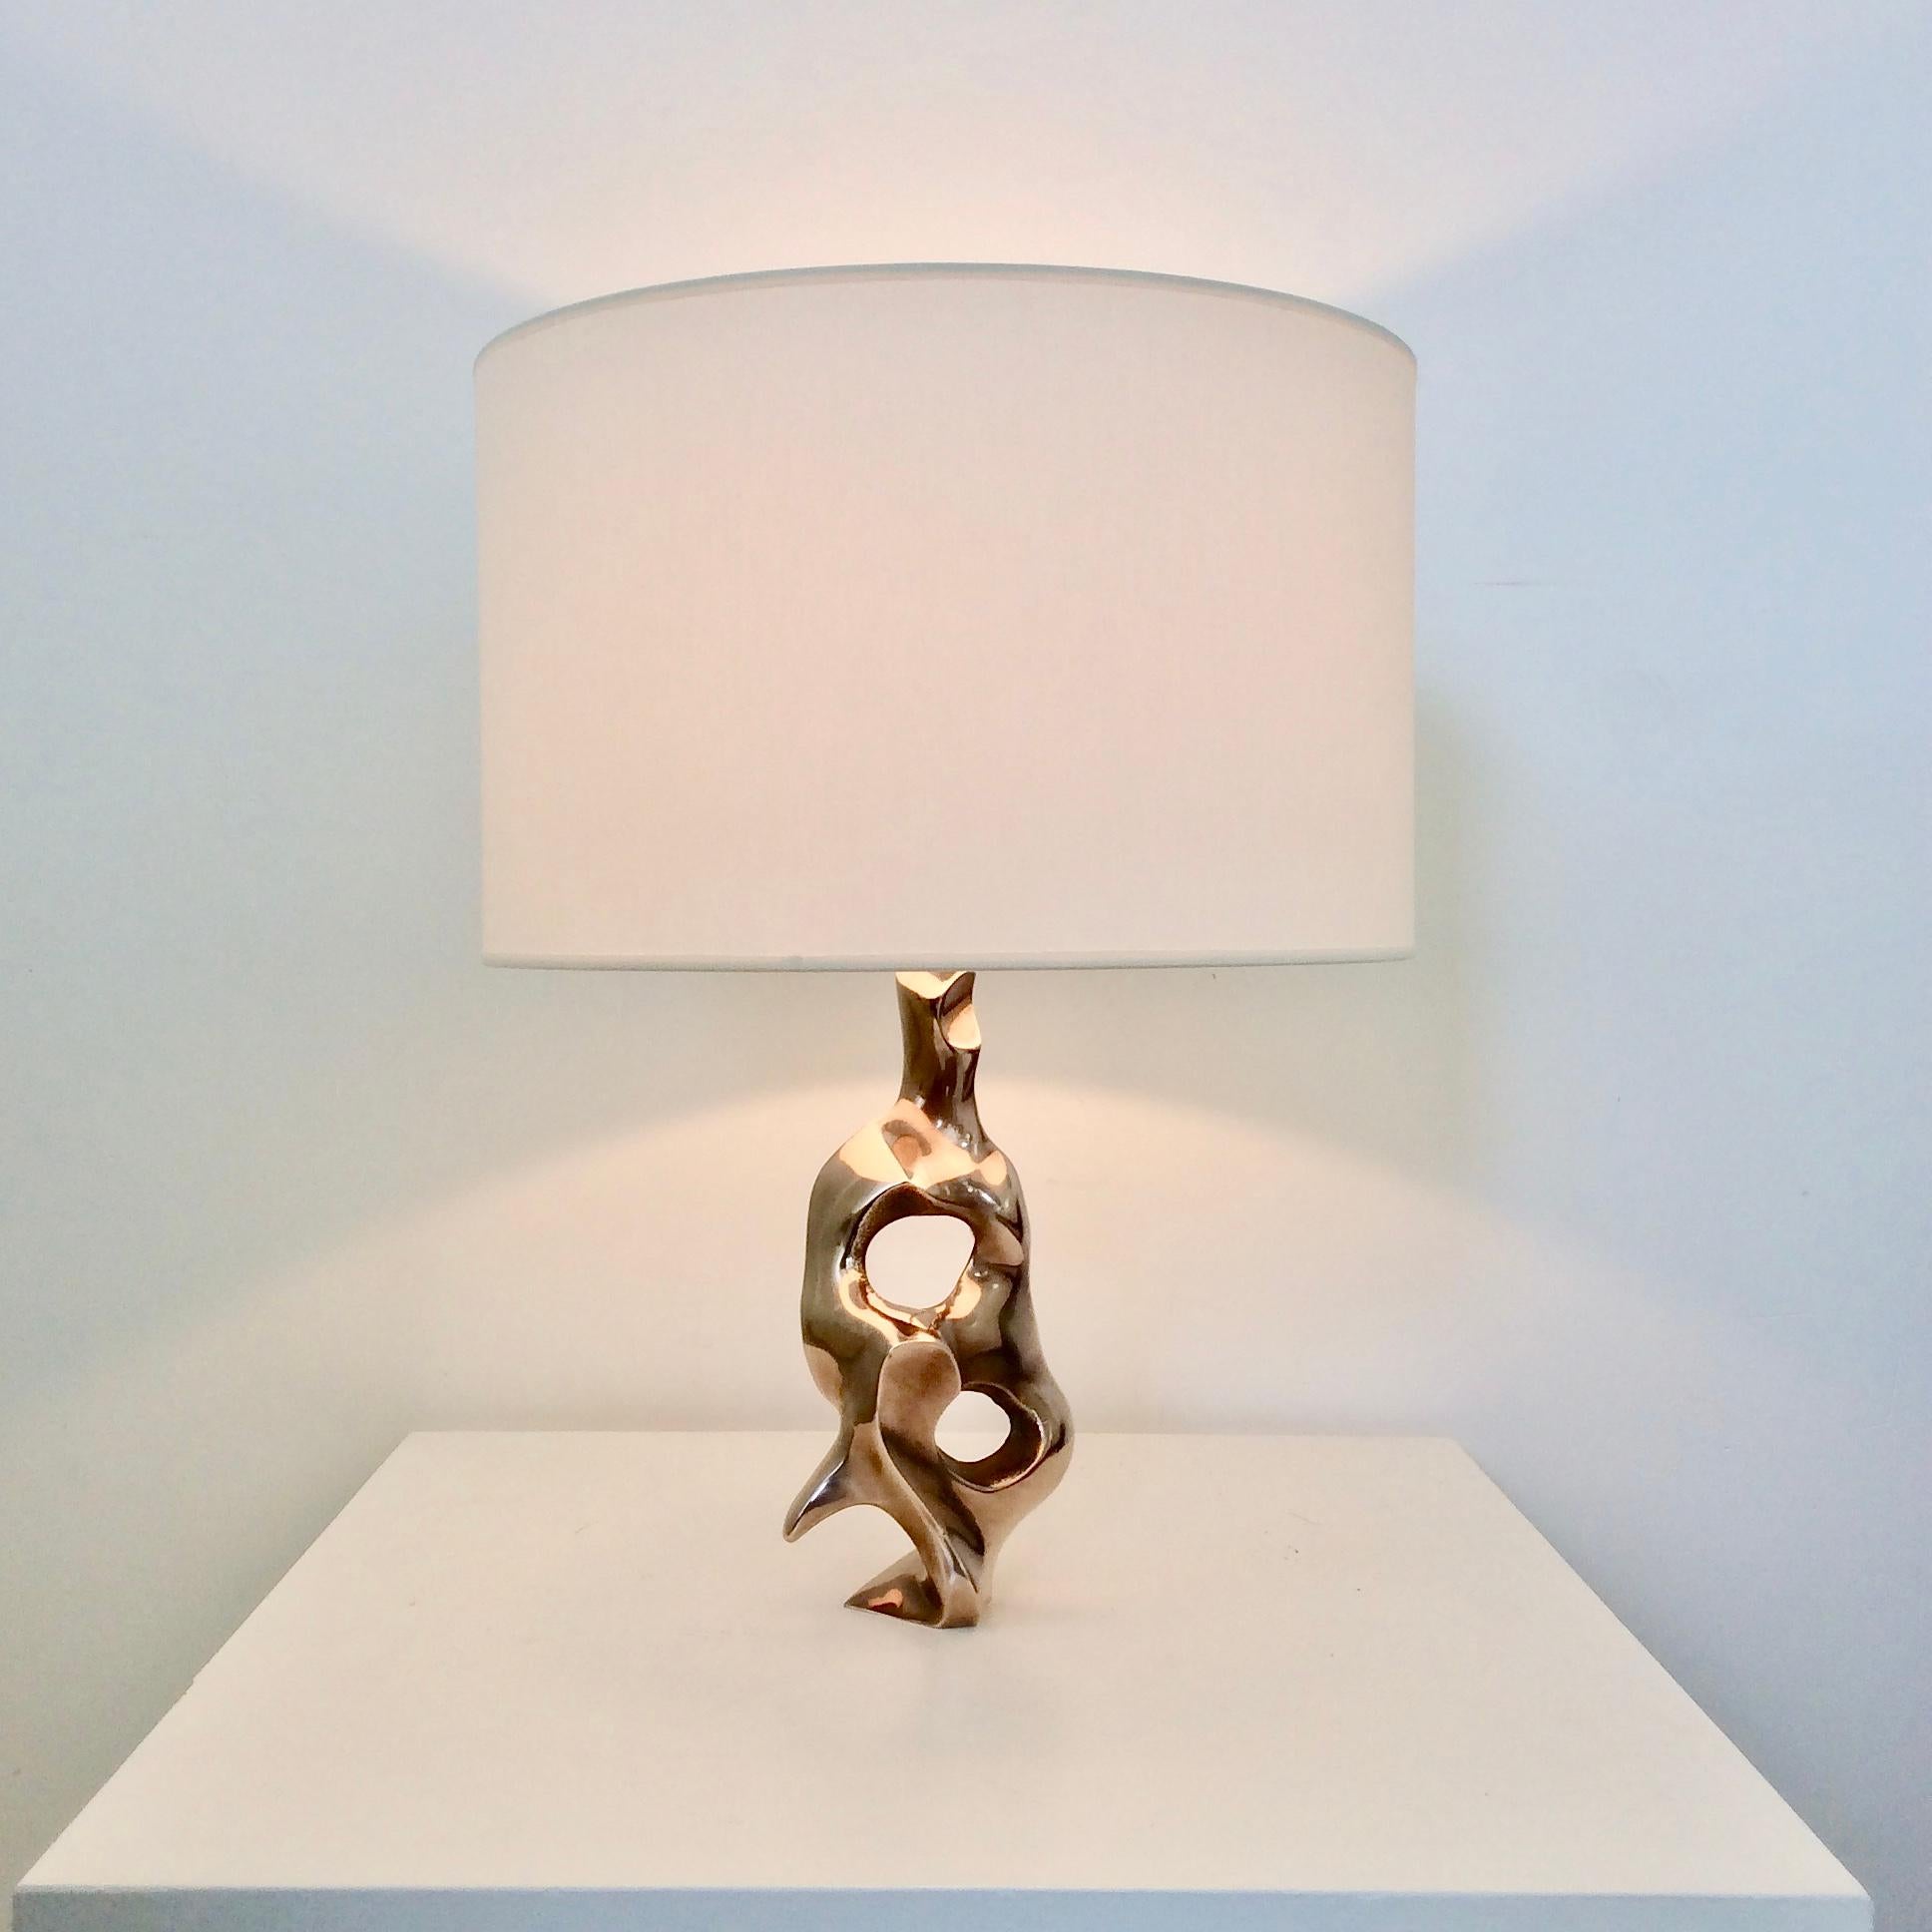 Nice Michel Jaubert sculptural table lamp, circa 1975, France.
Abstract polished bronze, fabric shade. Signed Jaubert.
Dimensions: 45 cm height, diameter 34 cm.
Height of the bronze: 24 cm. Height of the shade 21cm.
One B22 bulb of 40 W.
Good